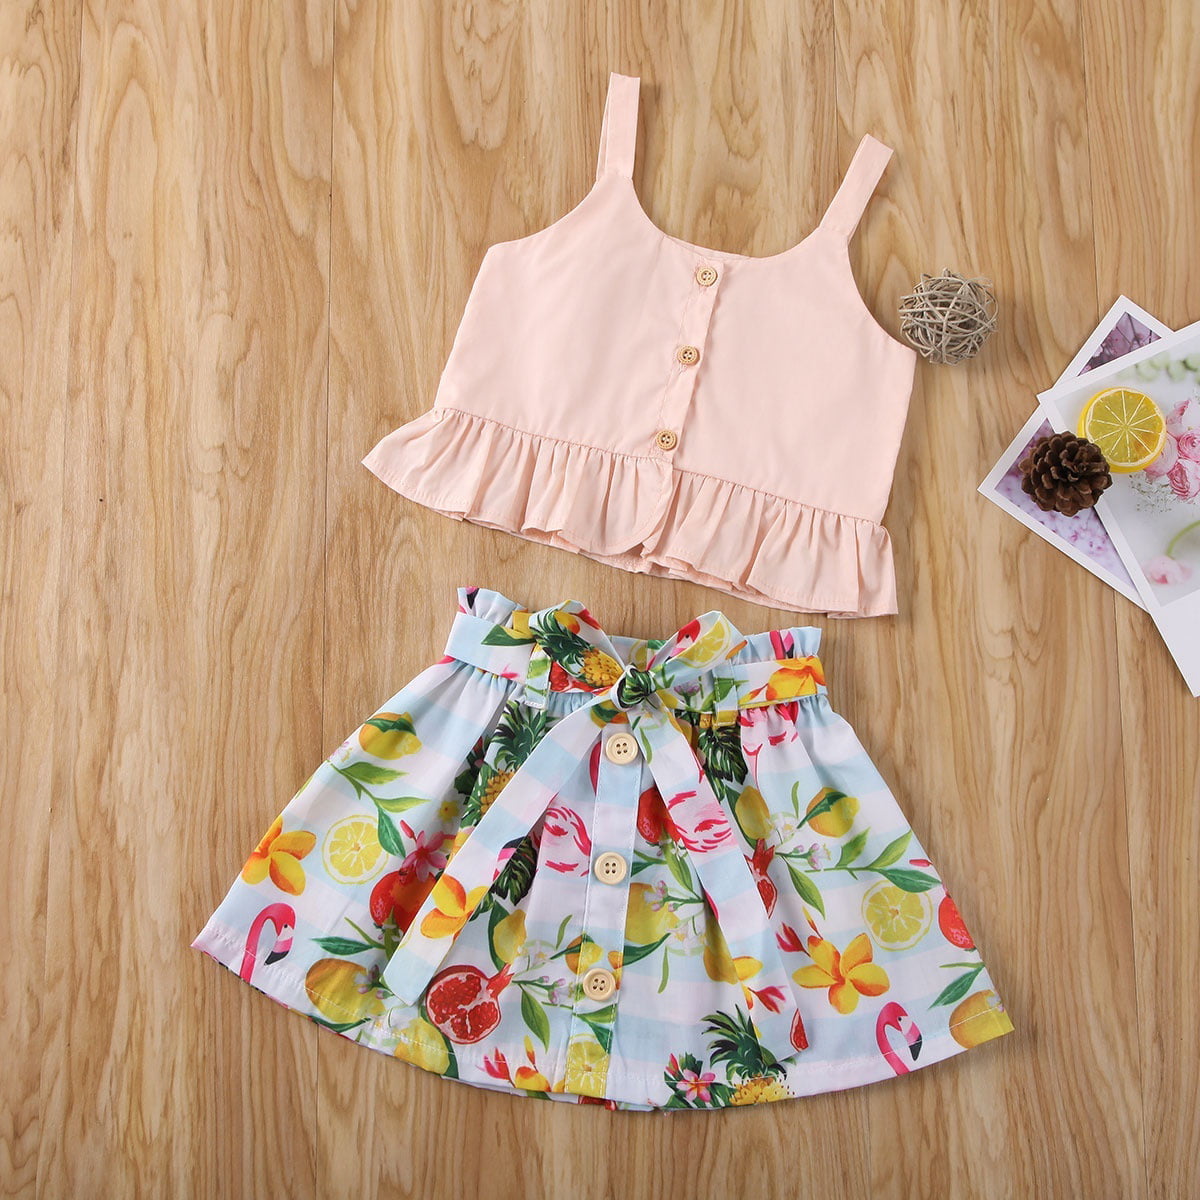 2pcs Toddler Kid Baby Girl Outfit Clothes Short Sleeve Shirt Top+Skirt Dress Set 